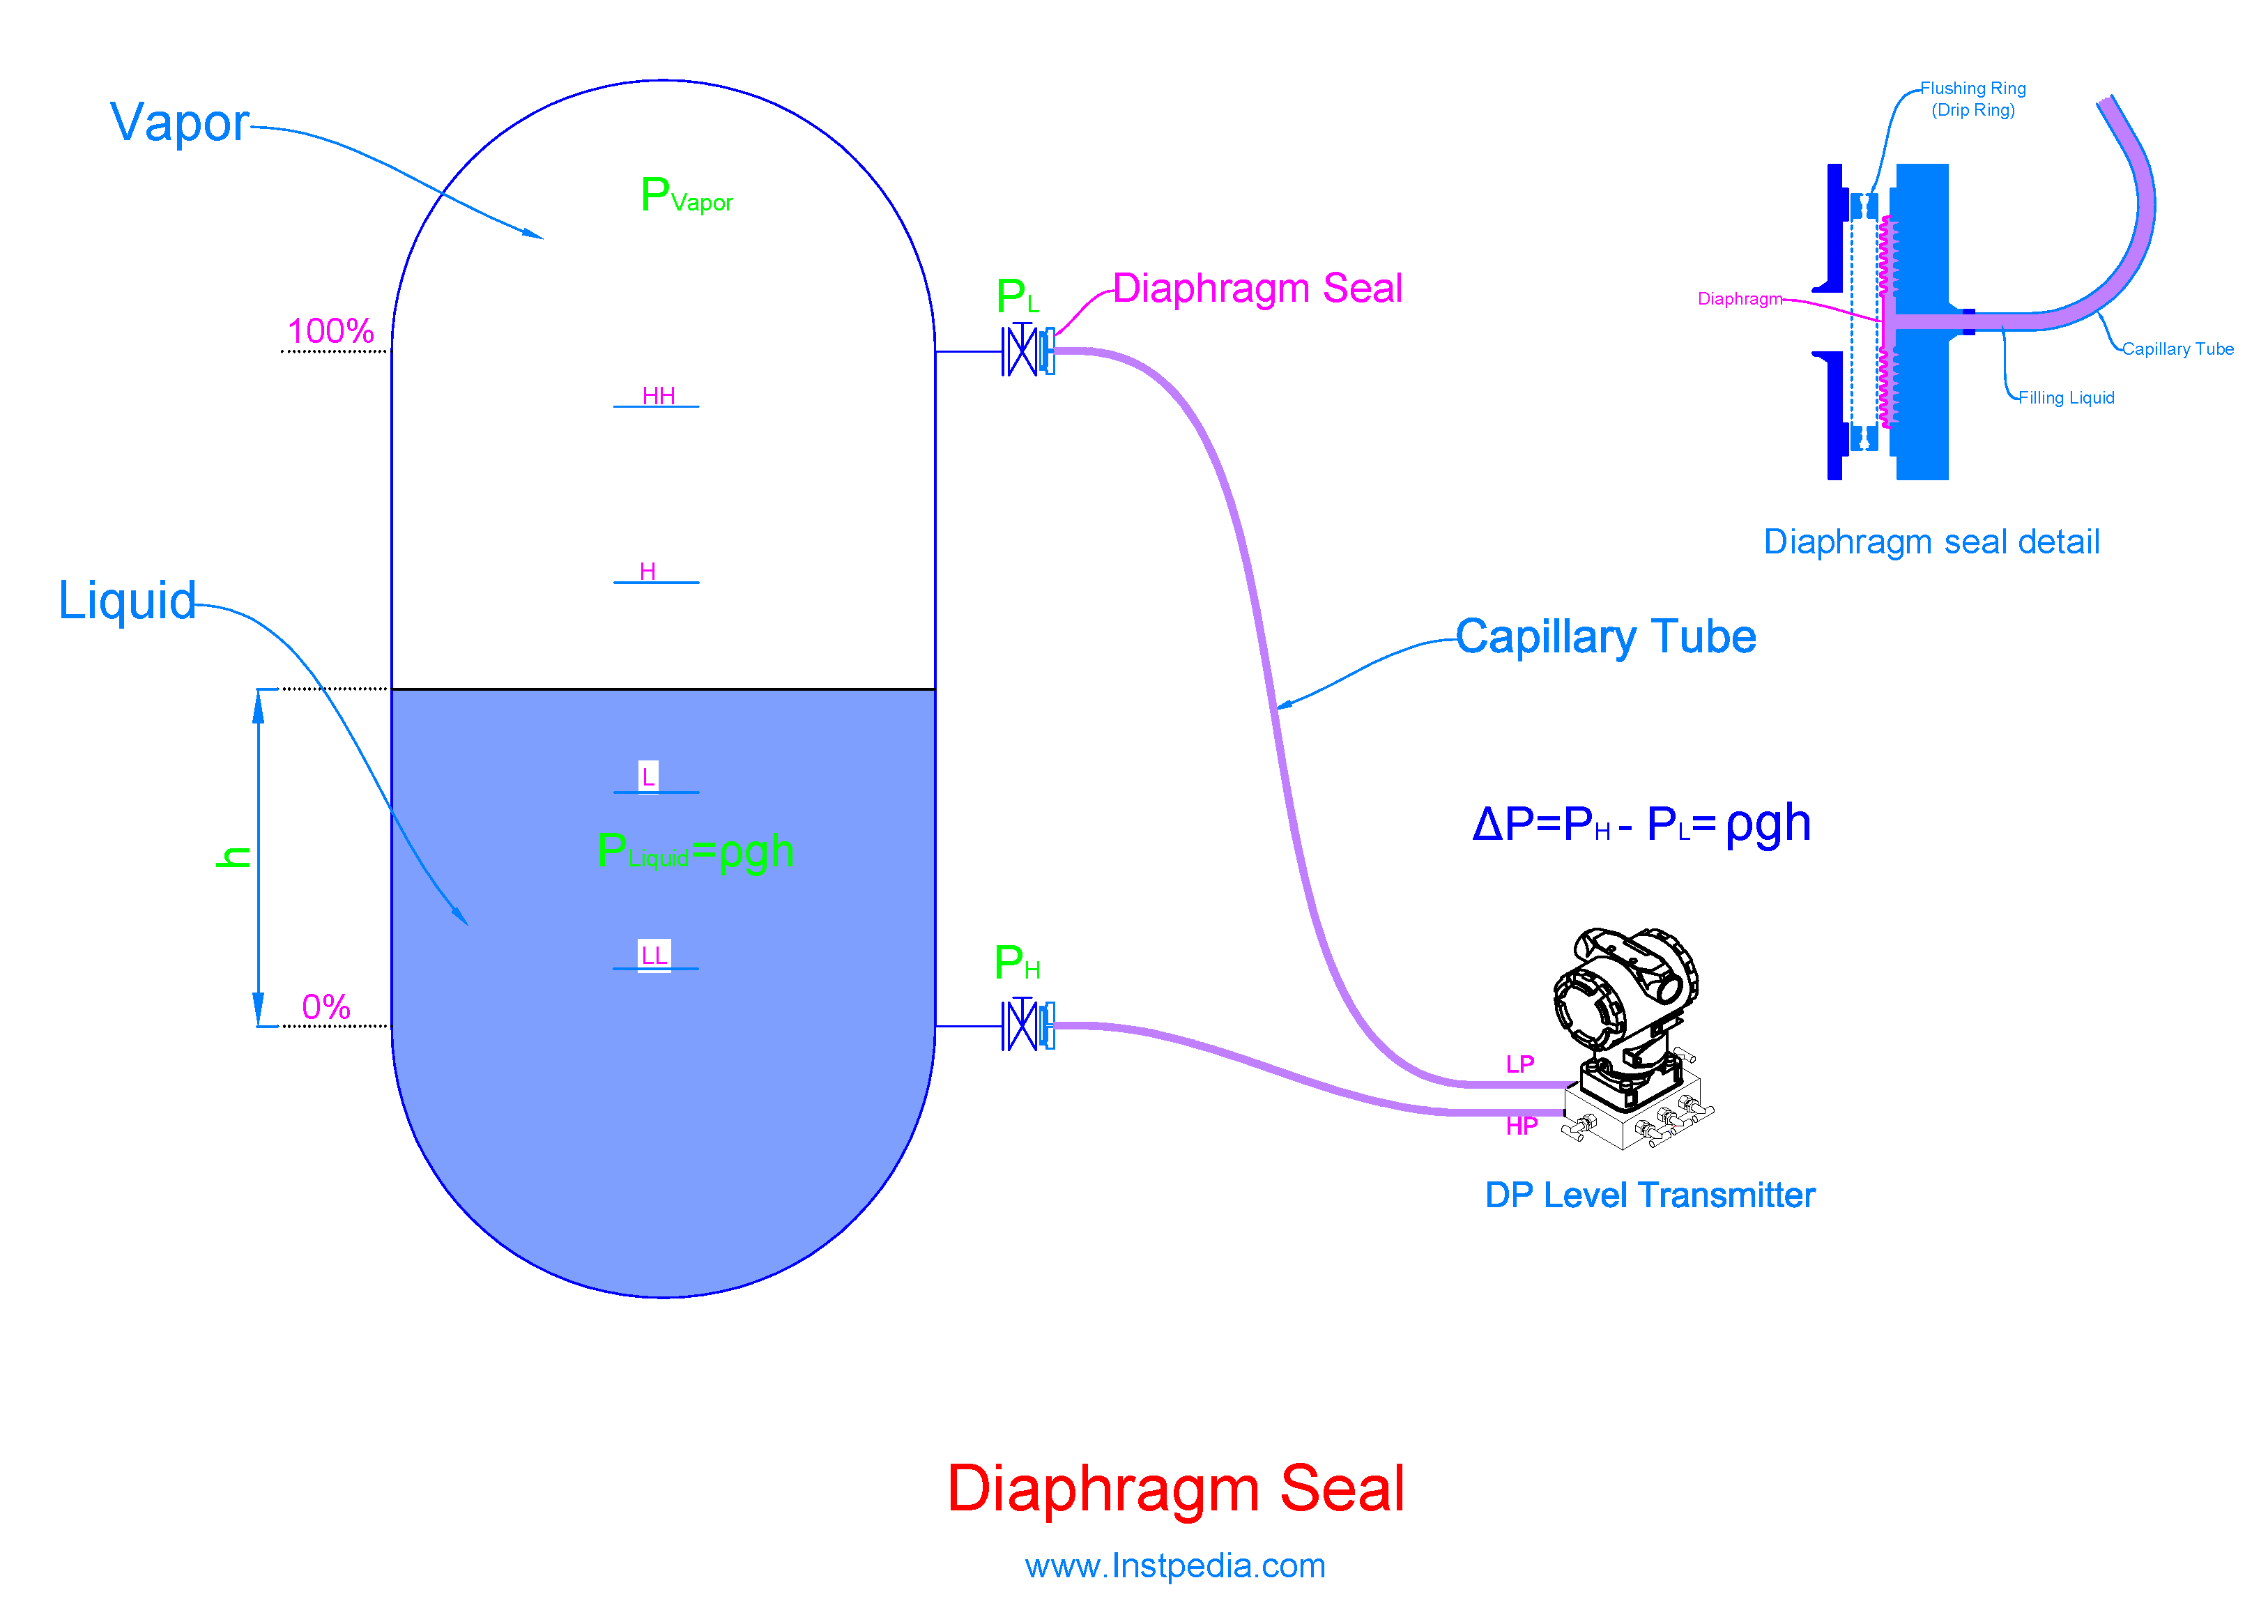 Diaphragm Seal with Capillary Tube